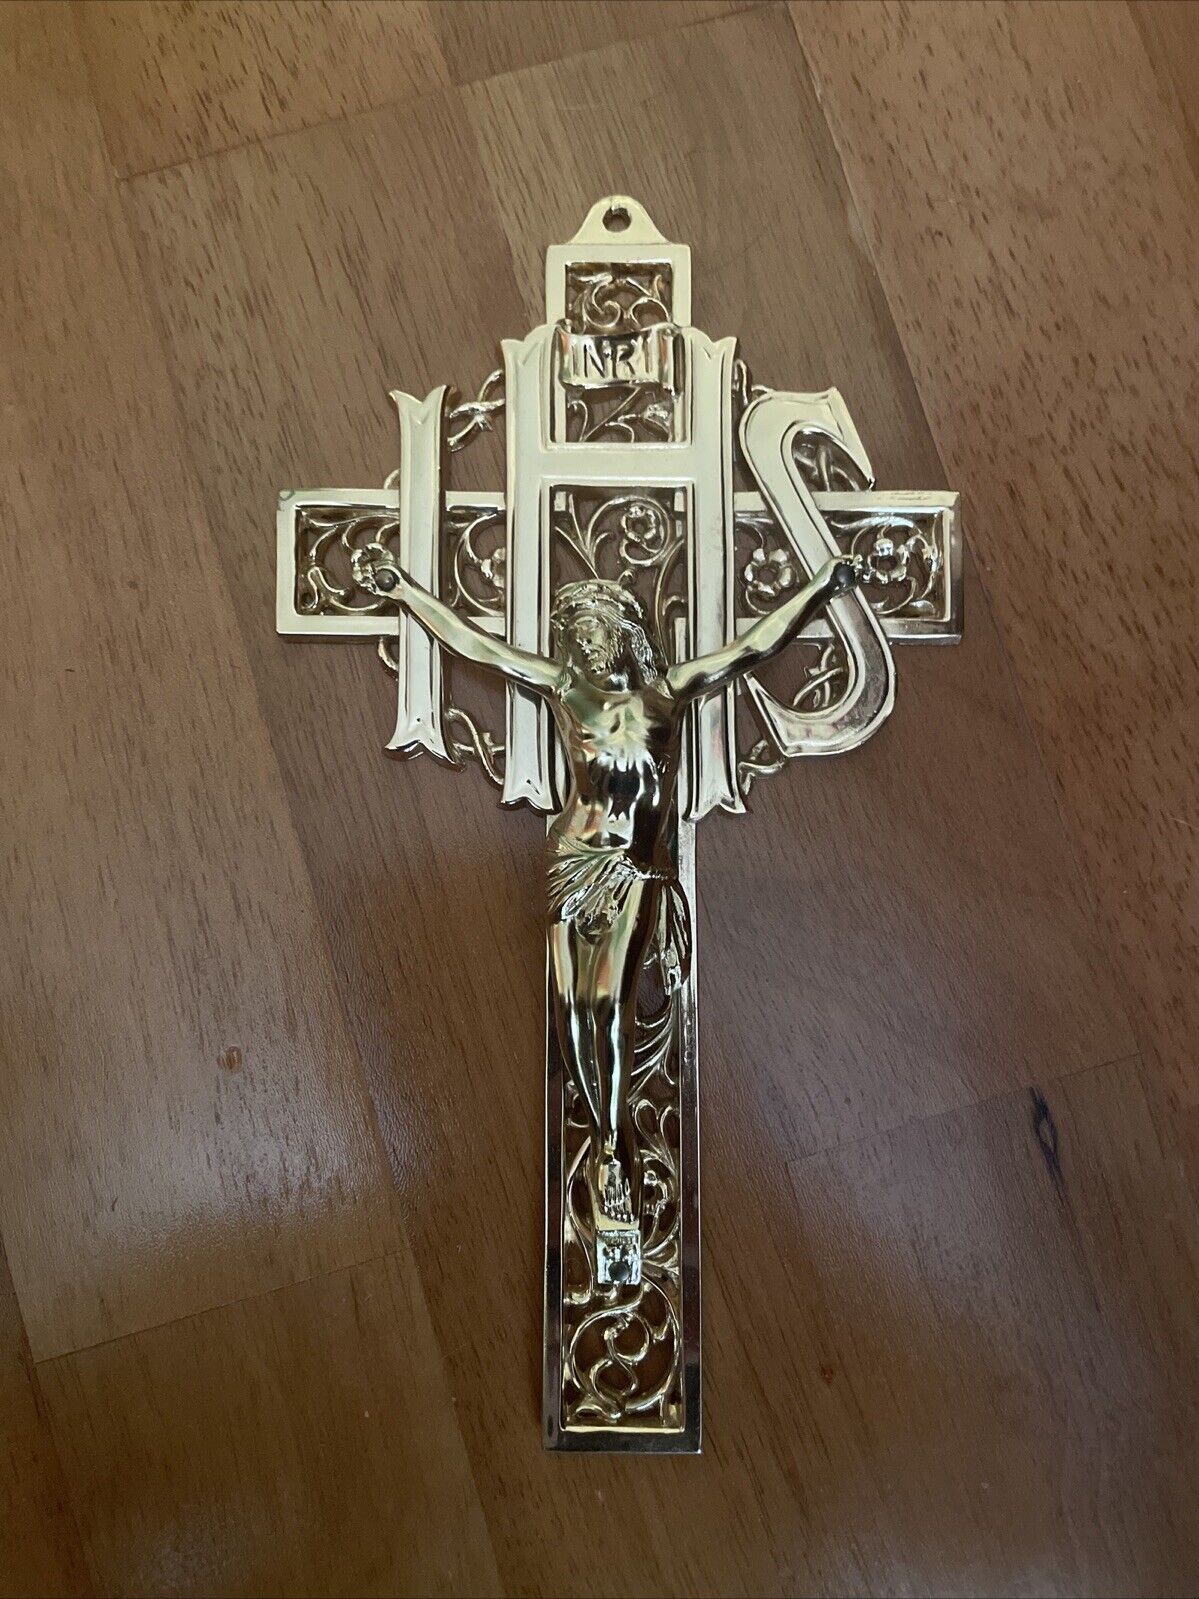 Vintage Goldtone Pierced Wall Mount Crucifix Jesus on Cross Ornate IHS INRI